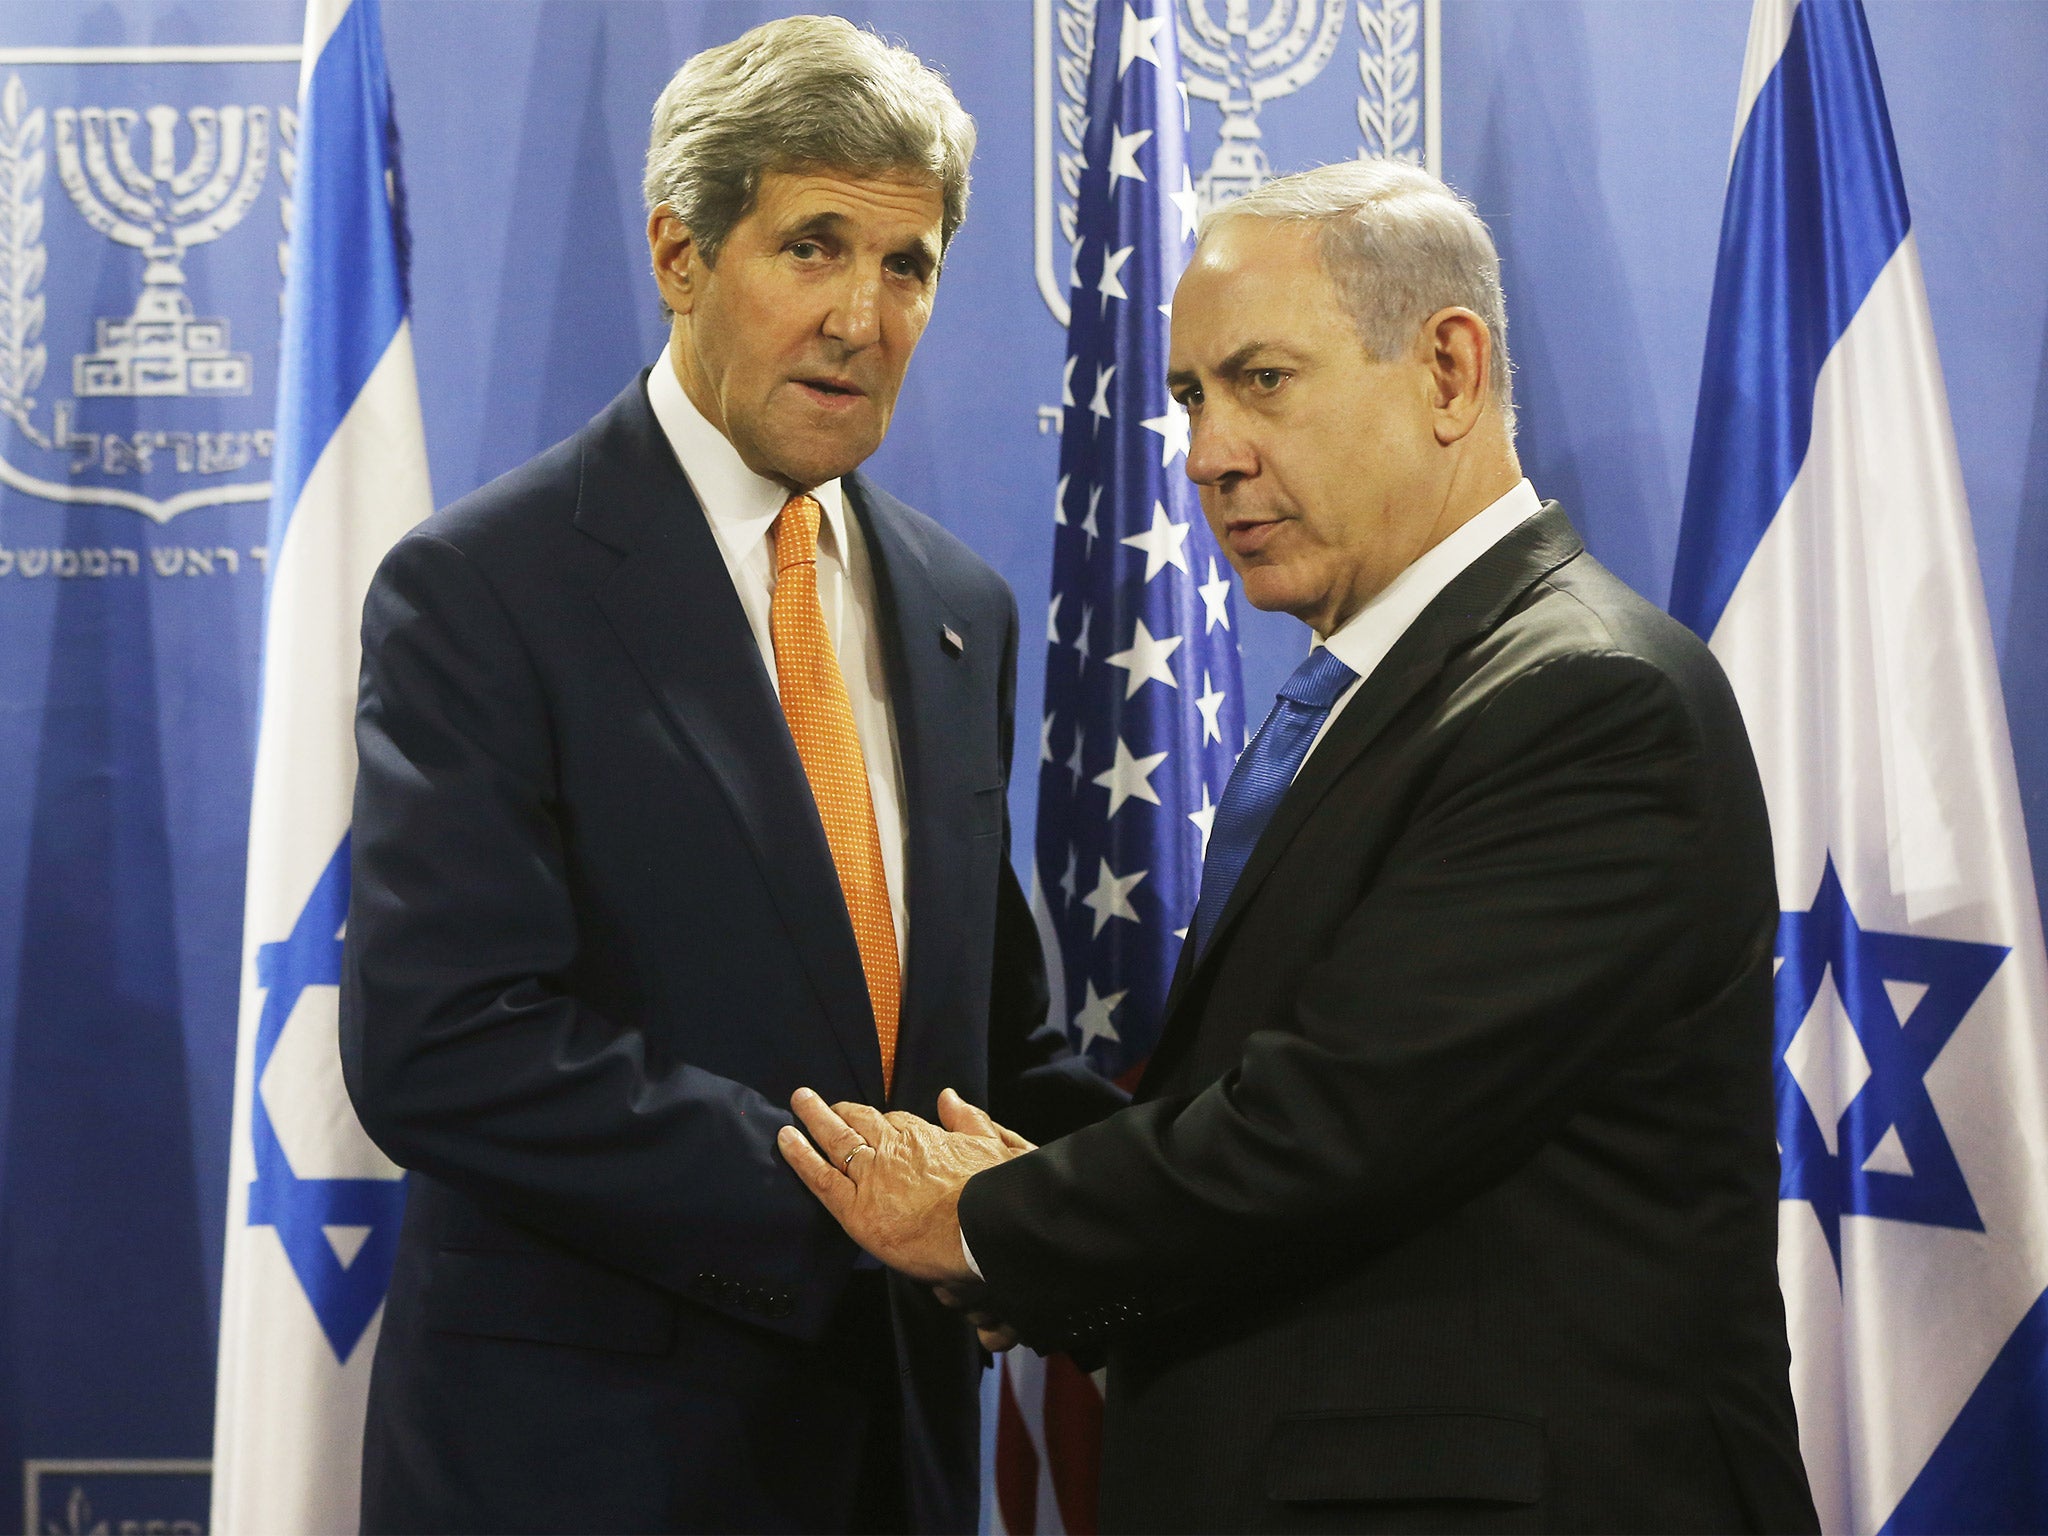 John Kerry meets with Israeli Prime Minister Benjamin Netanyahu in Tel Aviv as part of diplomatic efforts